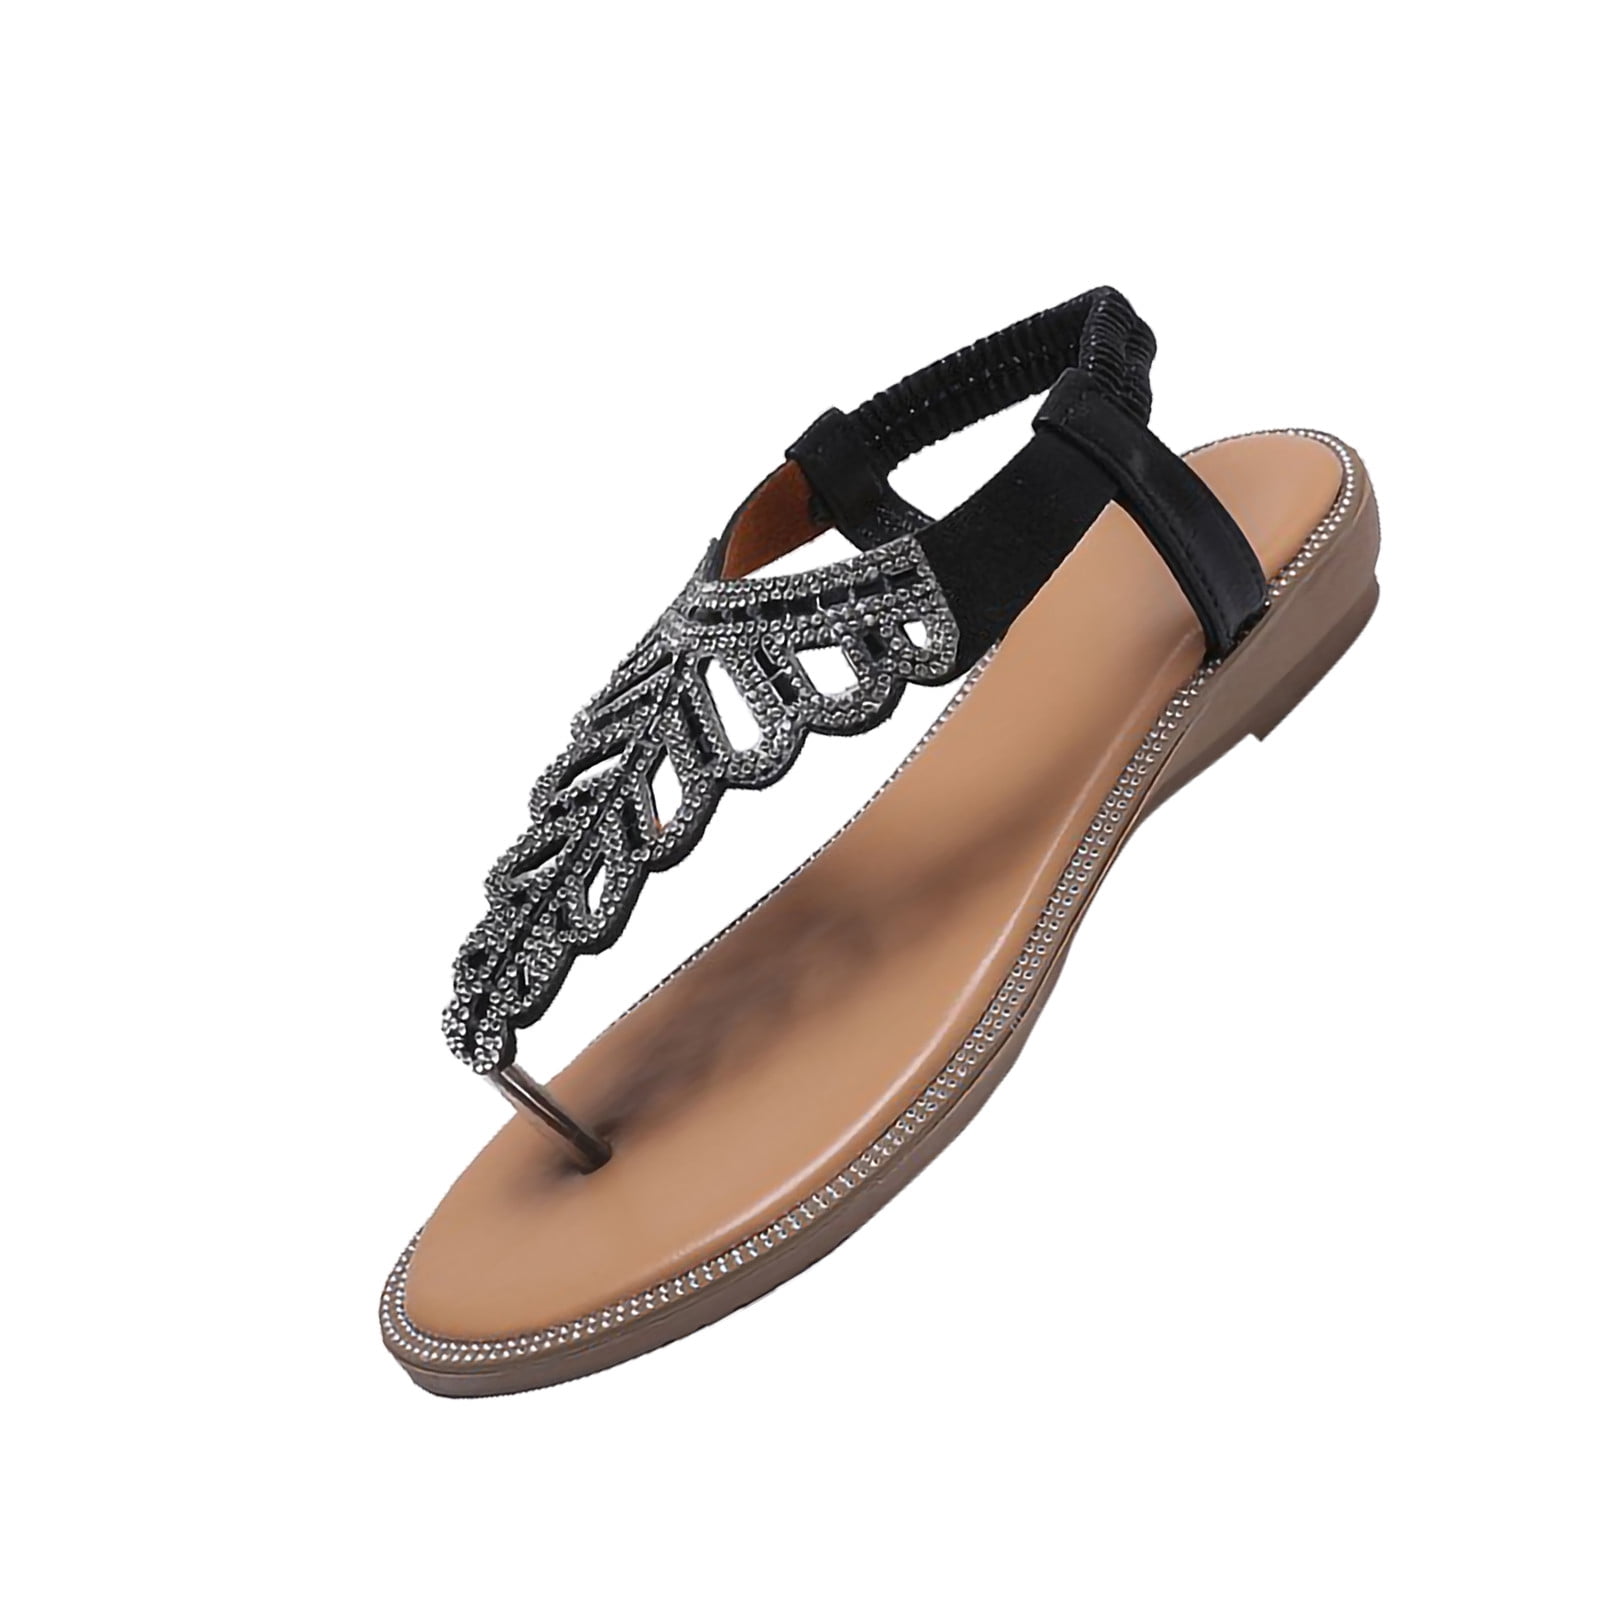 Ankle Wrap Flat Beach Shoes Fashion Bohemian Sequins Summer Sandals Inkach Women Flip-Flops Sandals 